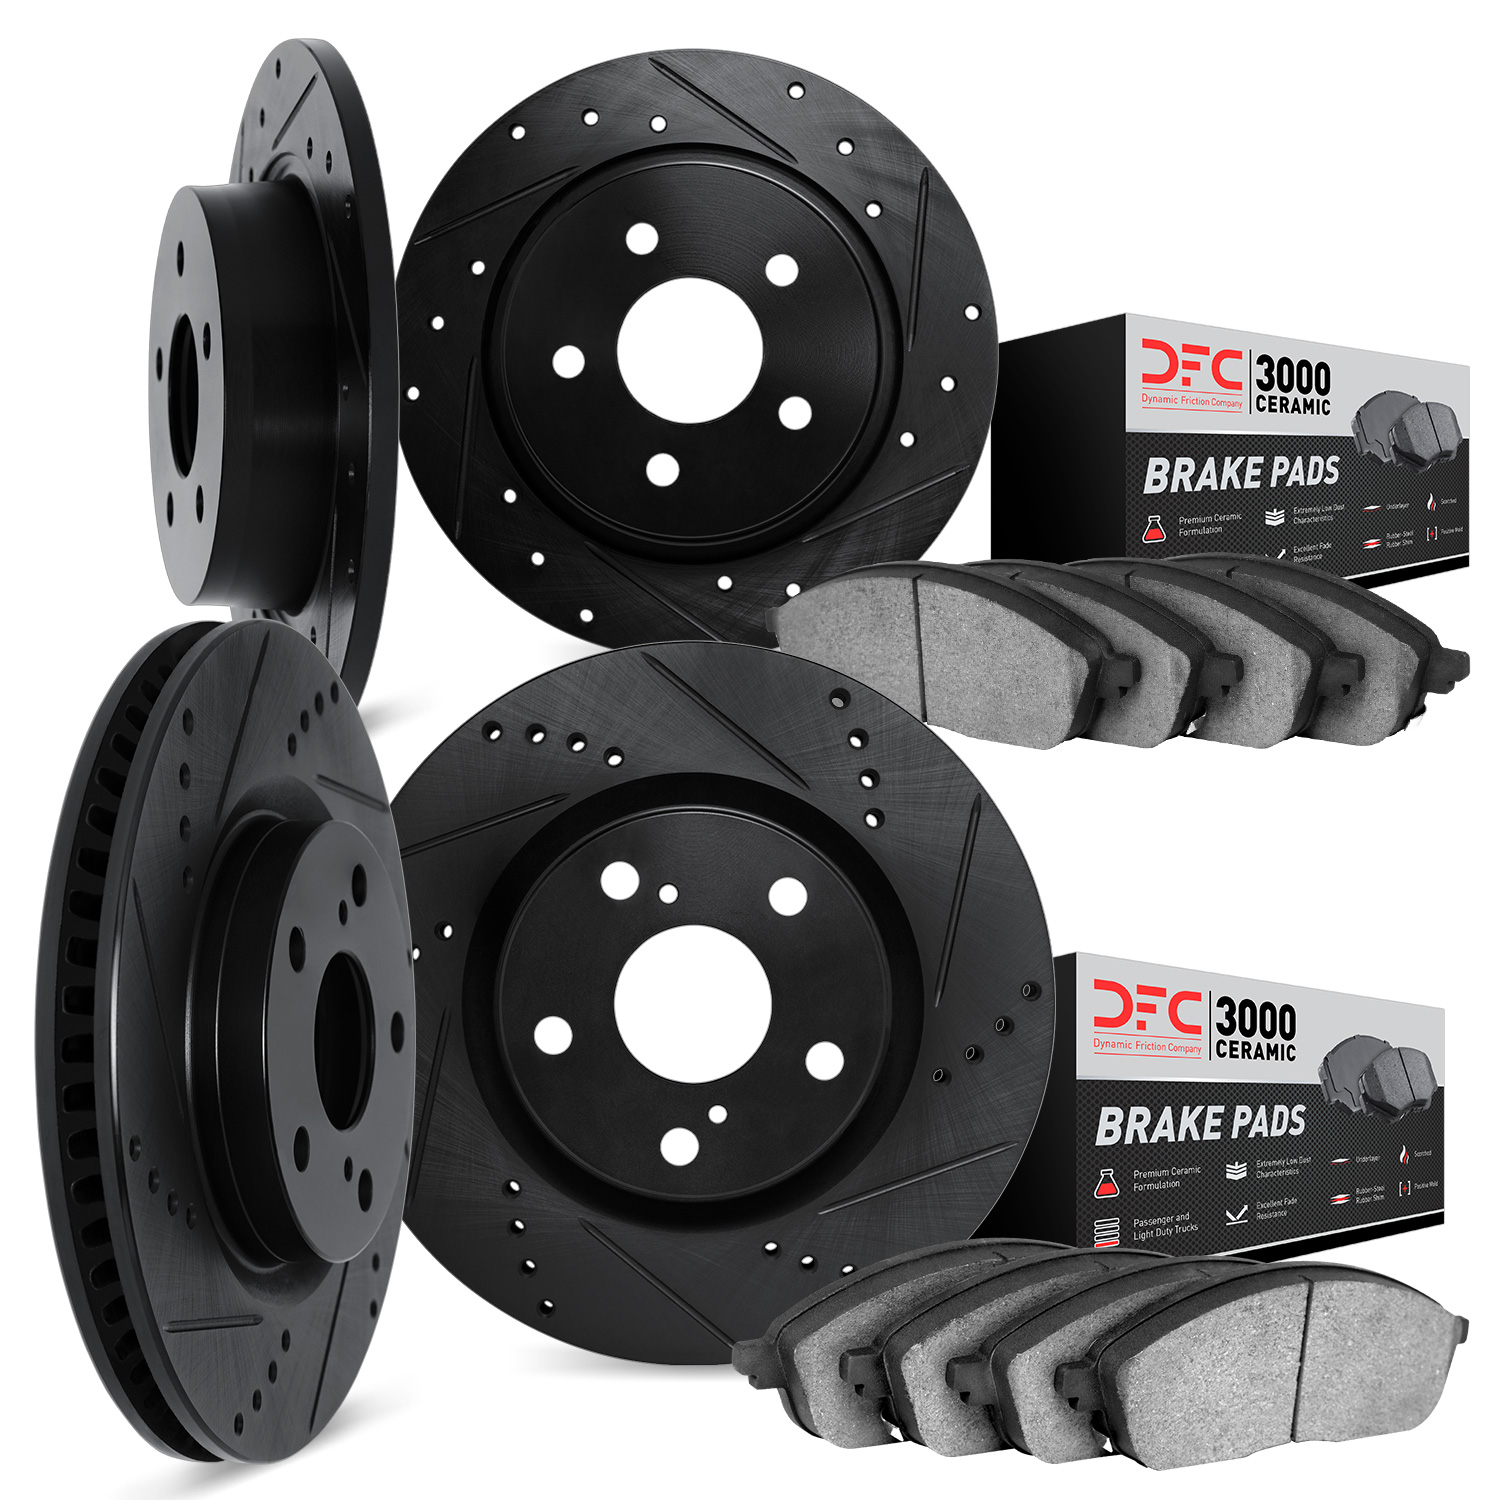 8304-76088 Drilled/Slotted Brake Rotors with 3000-Series Ceramic Brake Pads Kit [Black], 2009-2013 Multiple Makes/Models, Positi